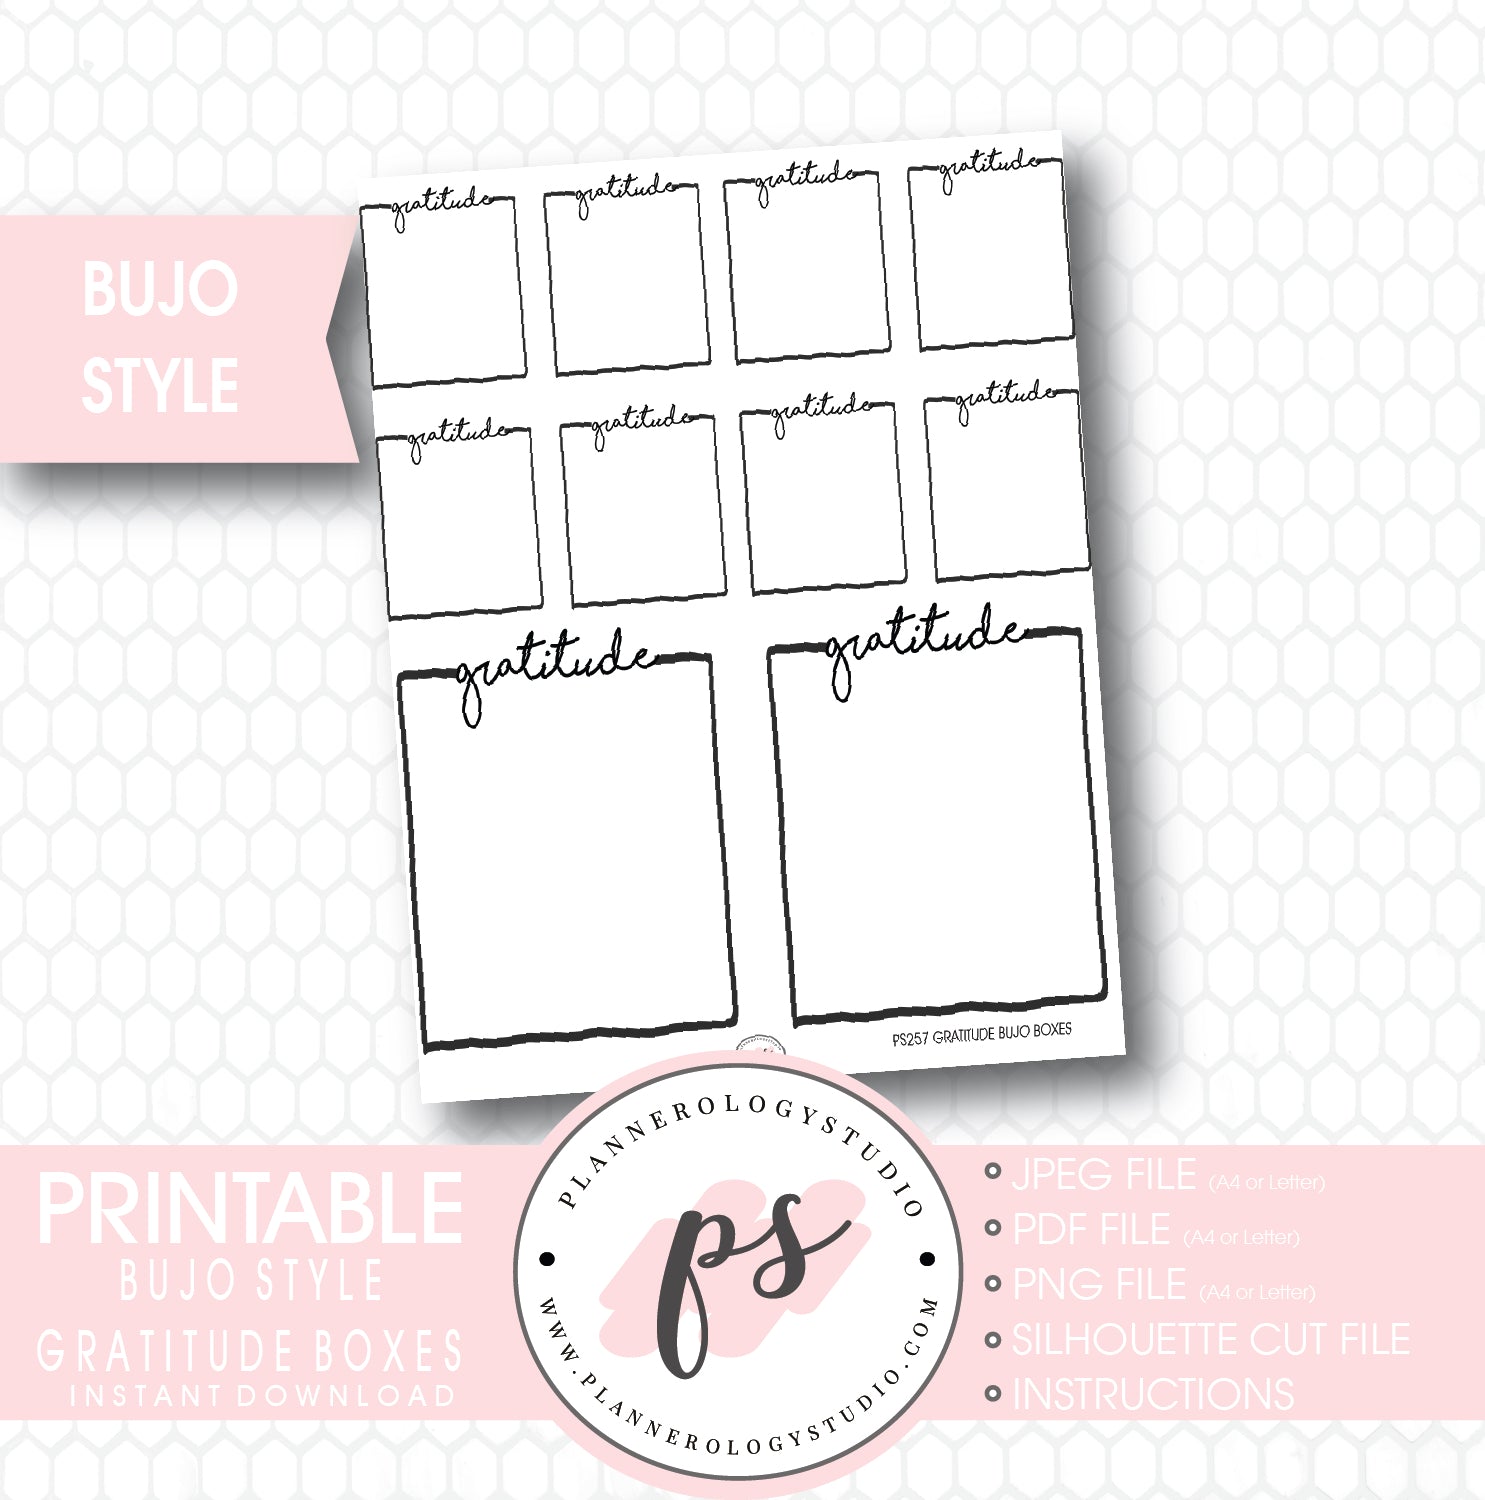 Bullet Journal Bujo Gratitude Boxes Printable Planner Stickers - Plannerologystudio